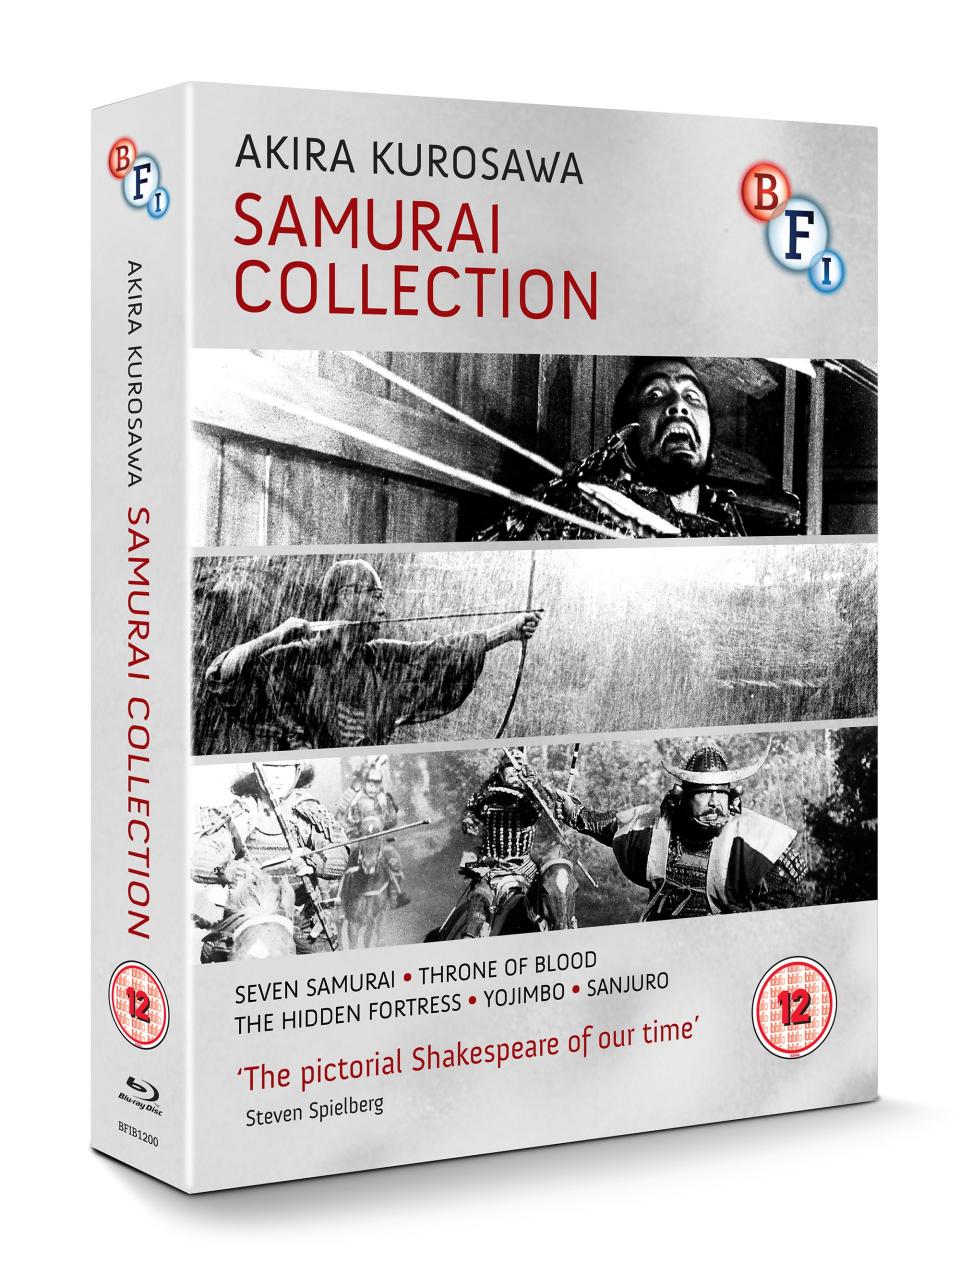 Akira Kurosawa Samurai Collection boxset (£29.99)